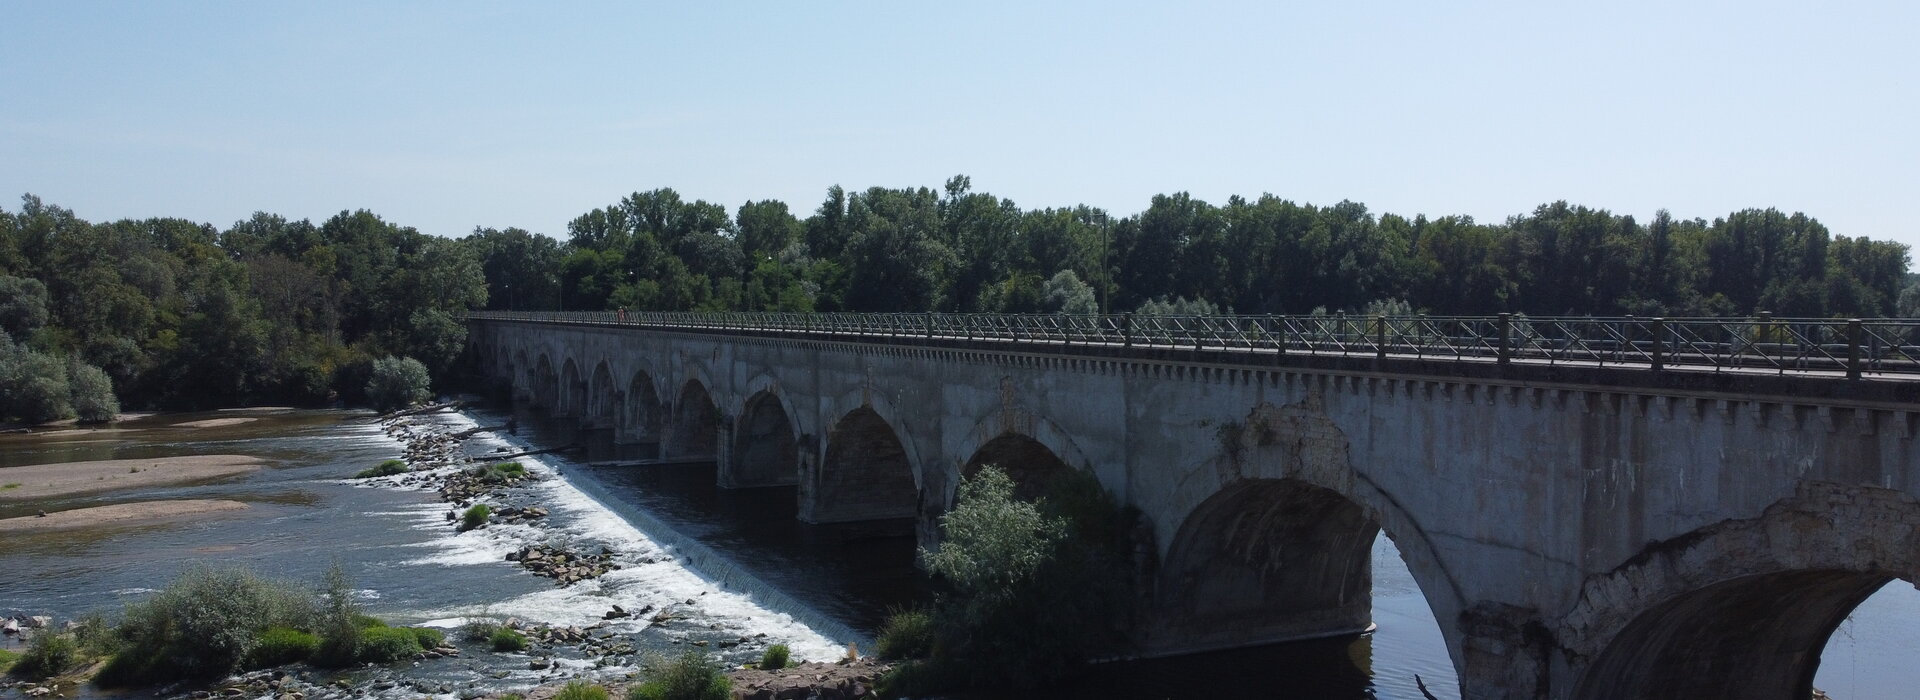 Pont-Canal de Guétin